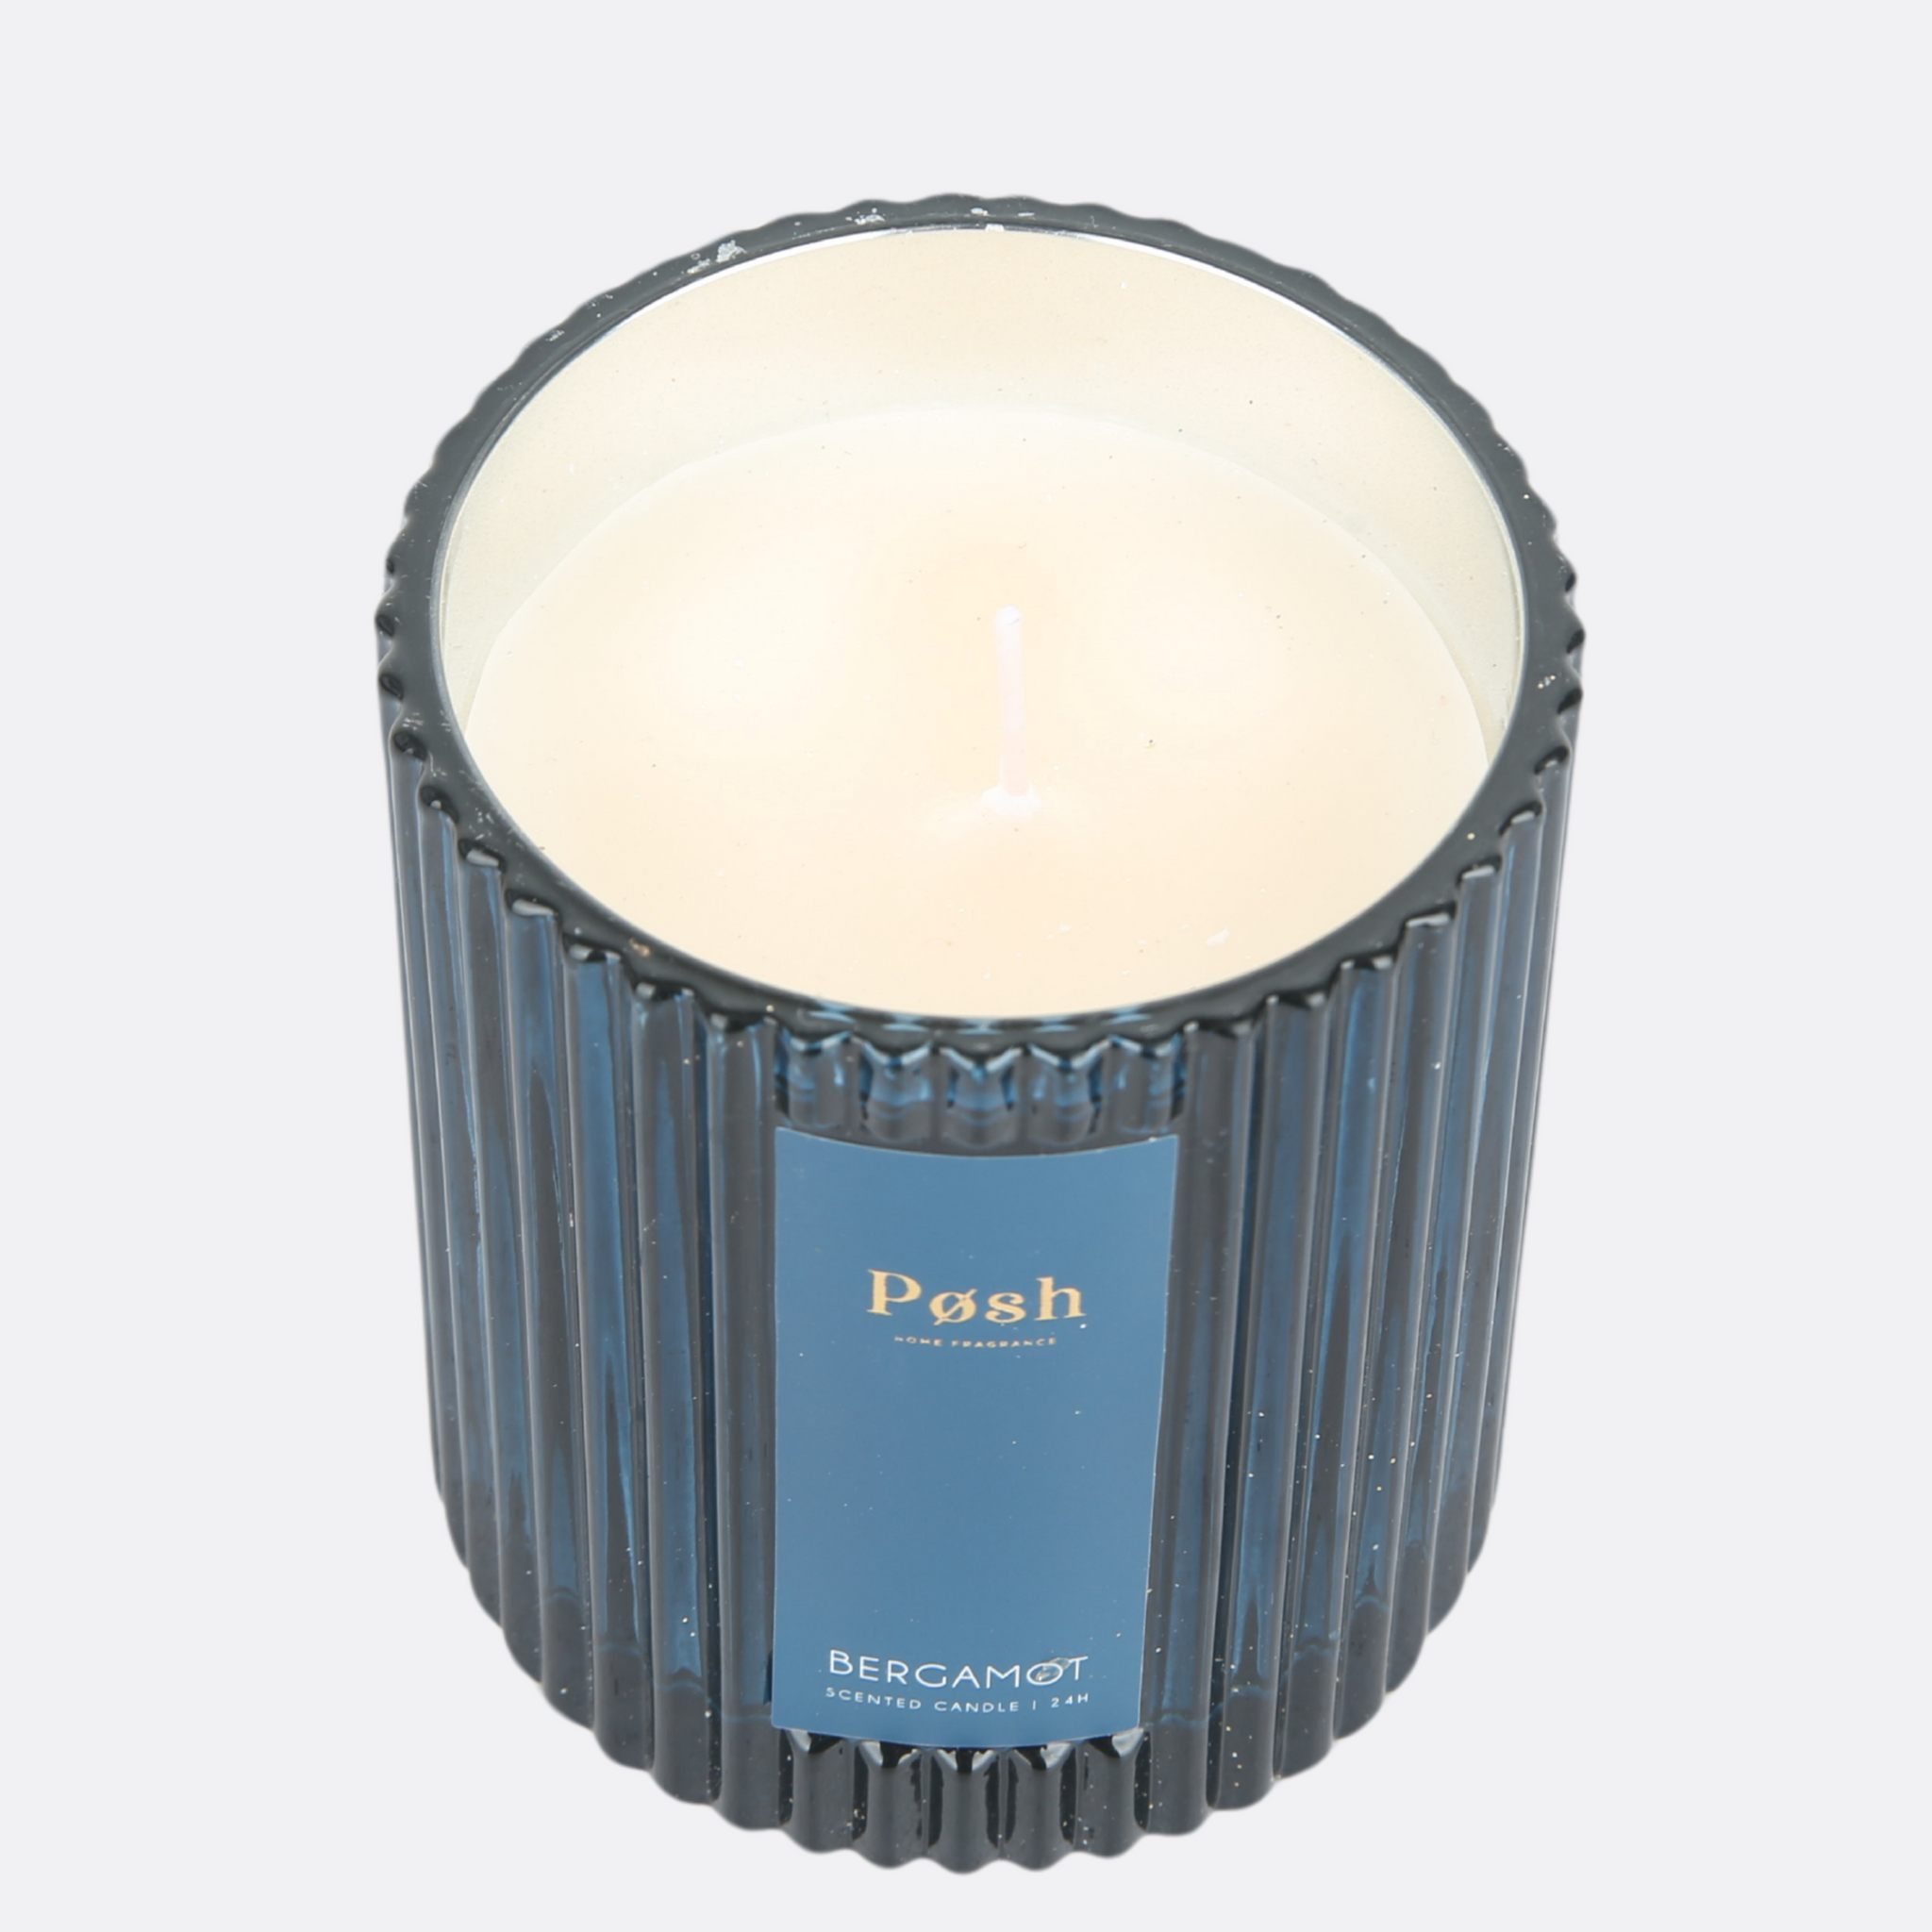 Posh Aromatic Candle